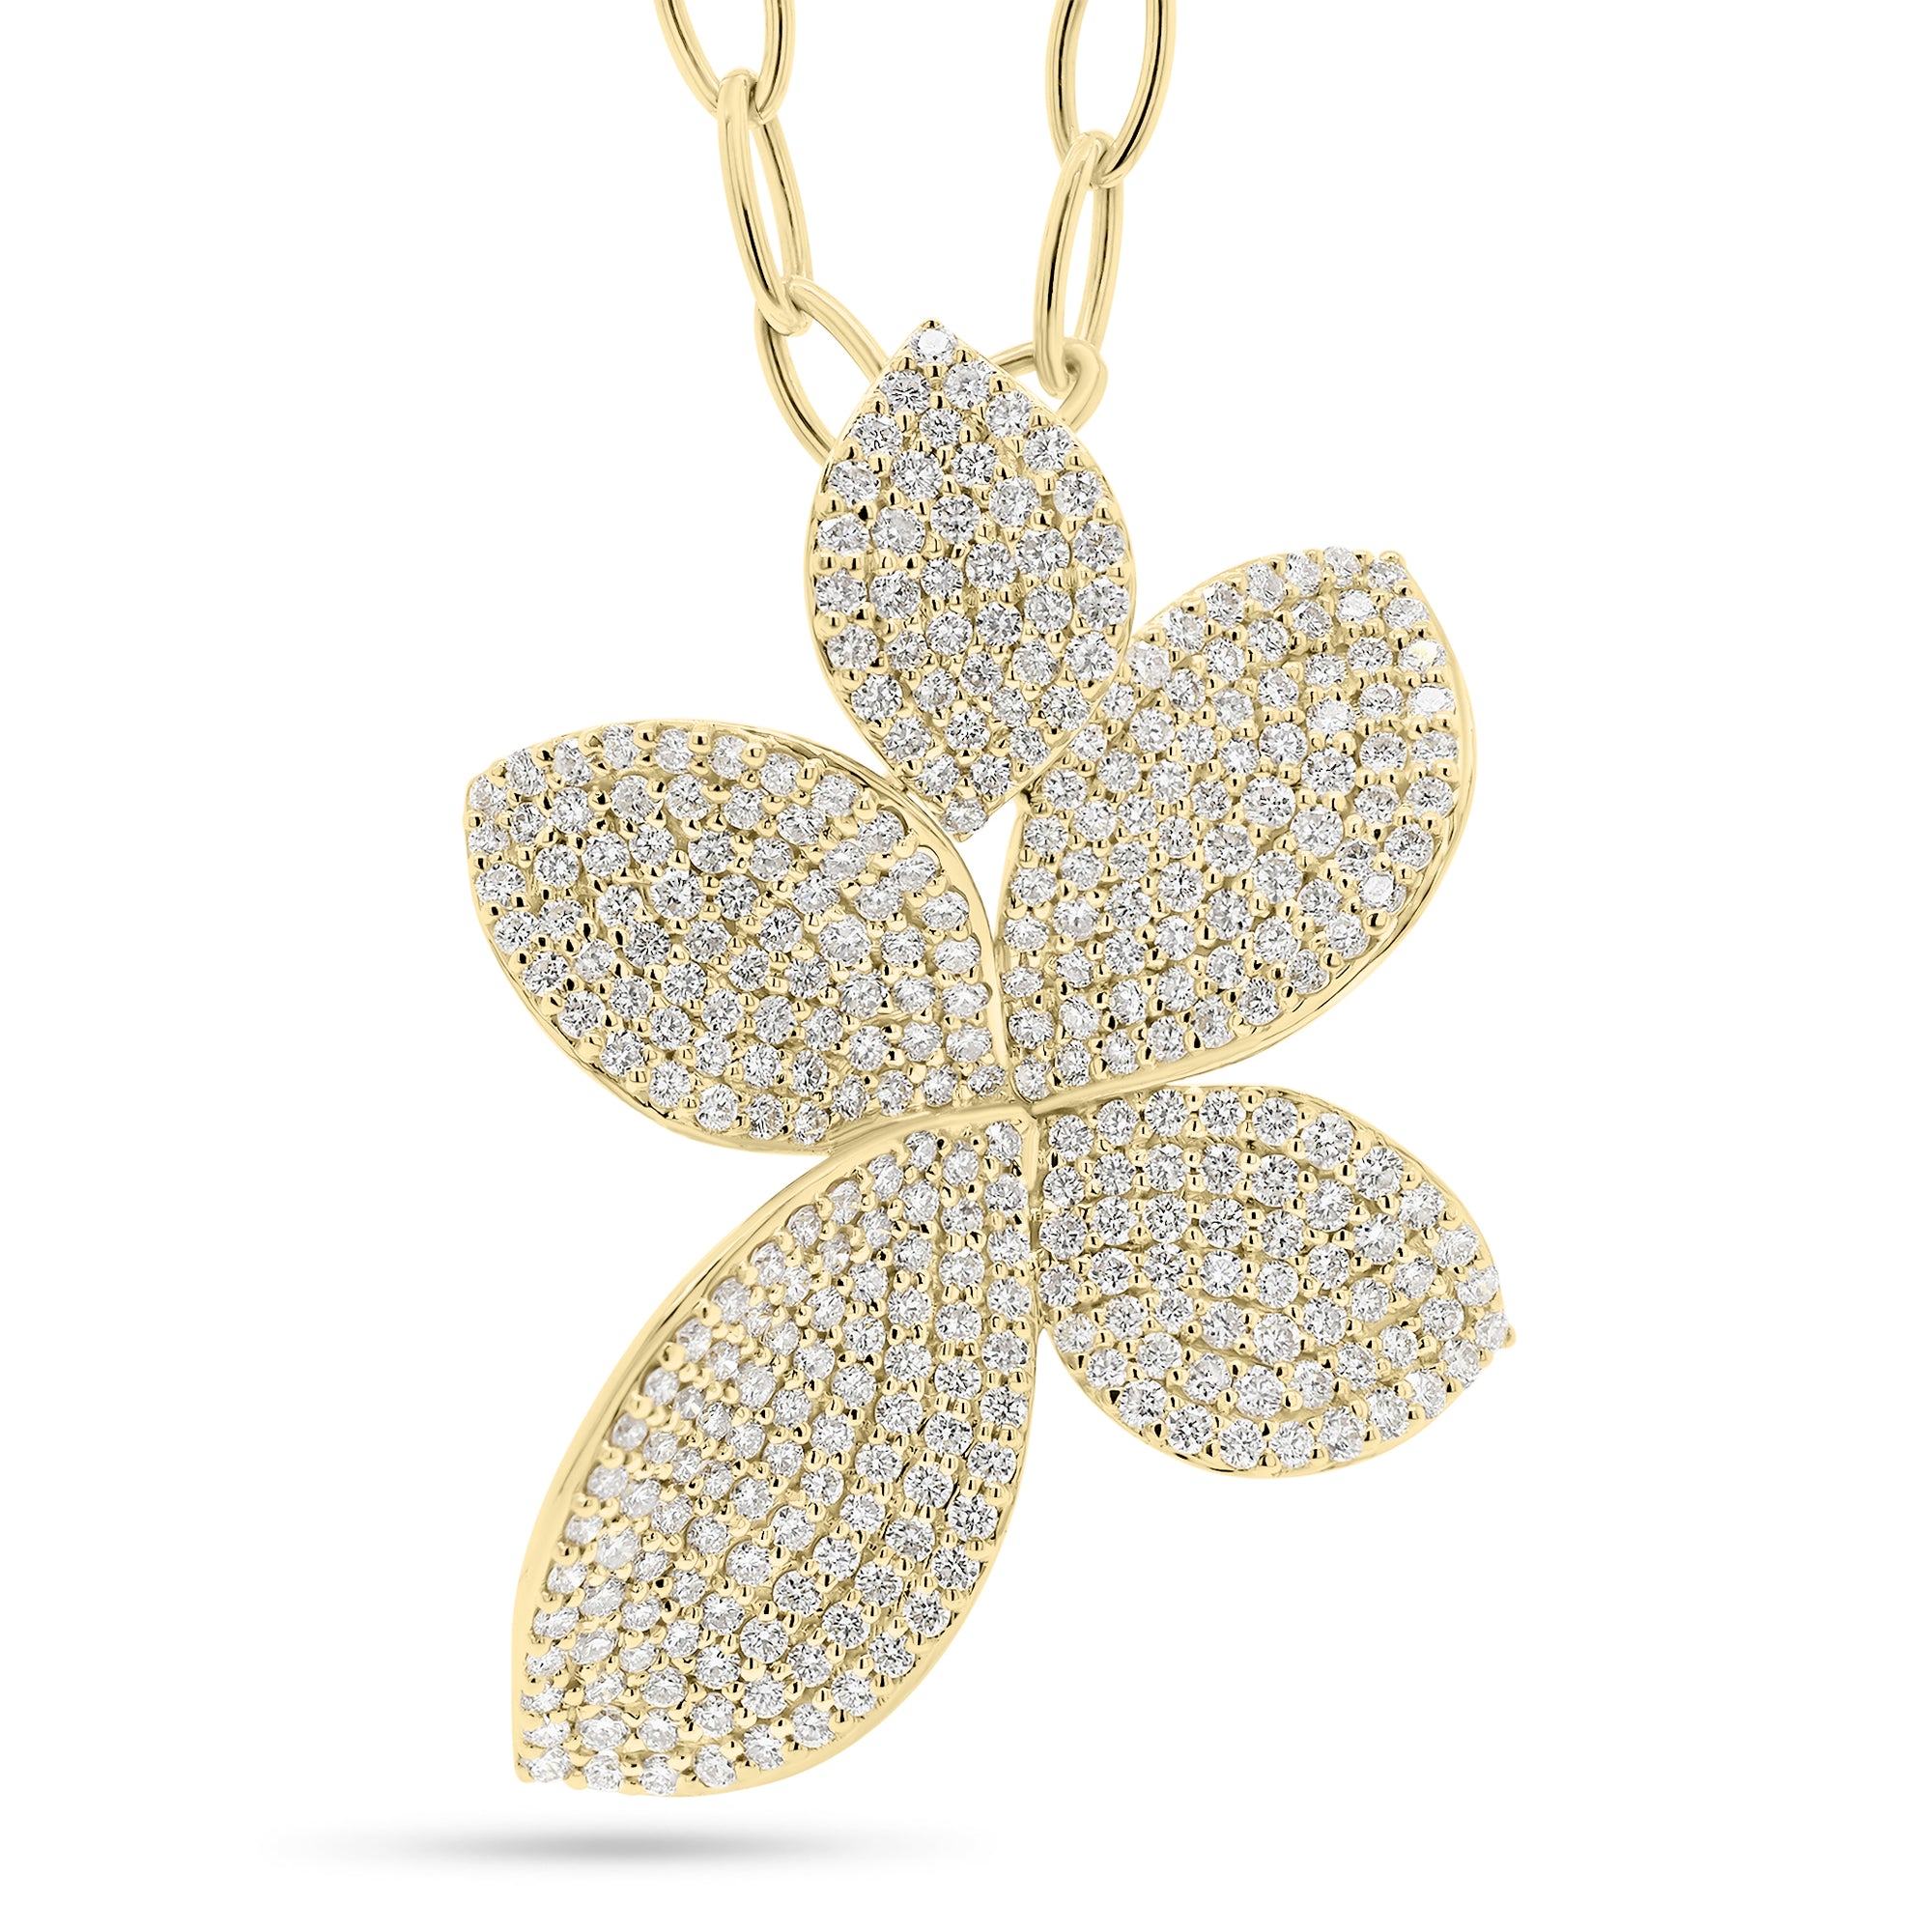 Pave Diamond Flower Petals Pendant -14K yellow gold weighing 8.0 grams  -333 round diamonds weighing 2.62  carats